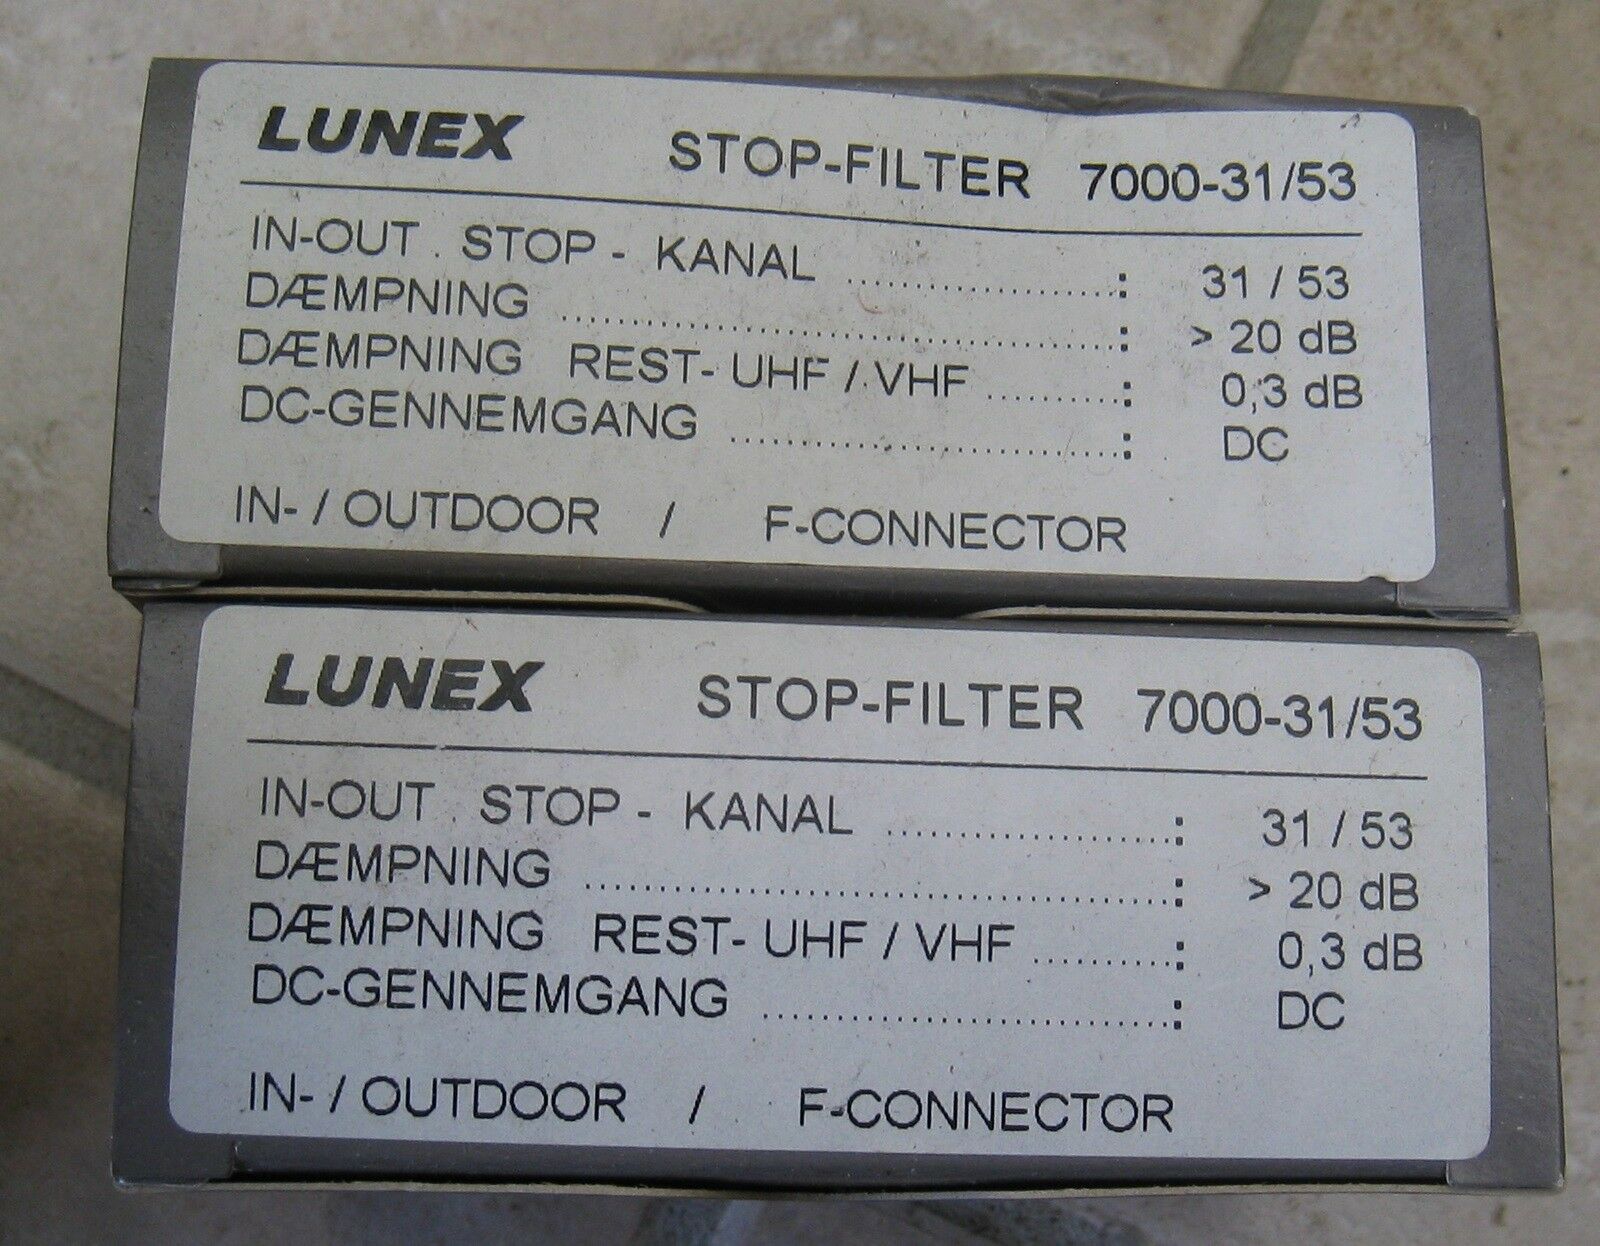 Stopfilter, Lunex, 31/53